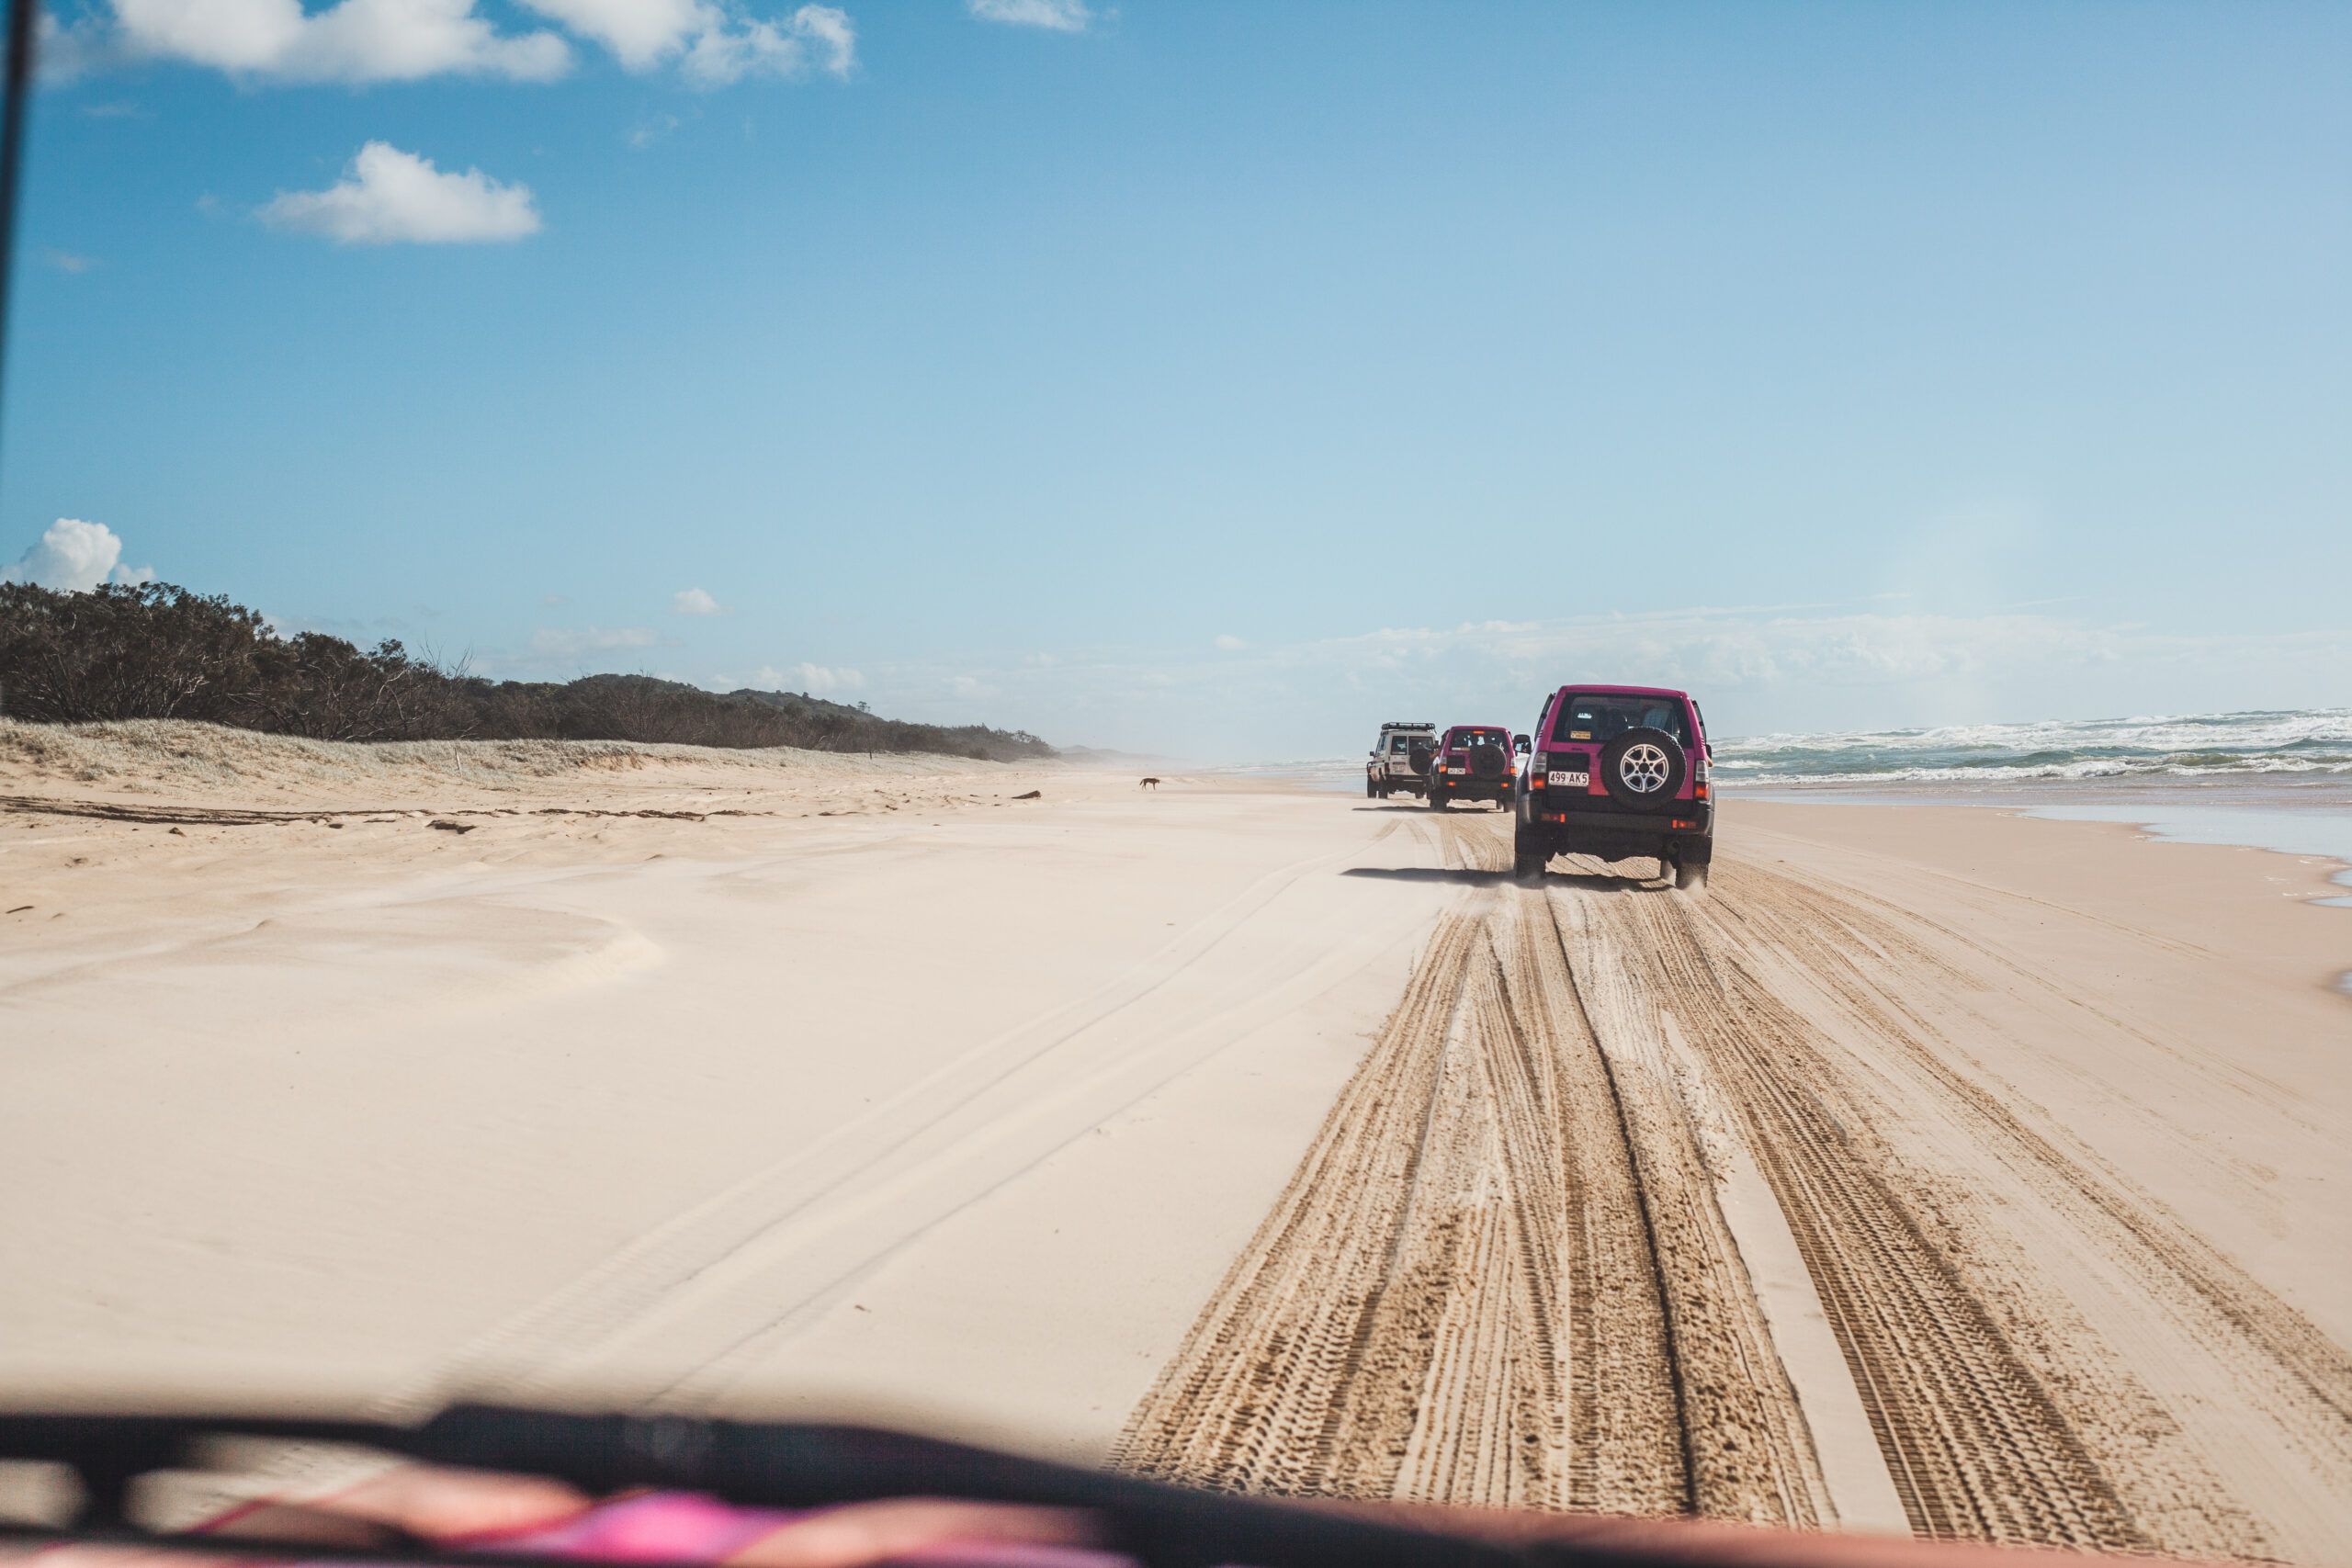 Fraser Island Beach House Tag-Along 4WD Tour 2-Day